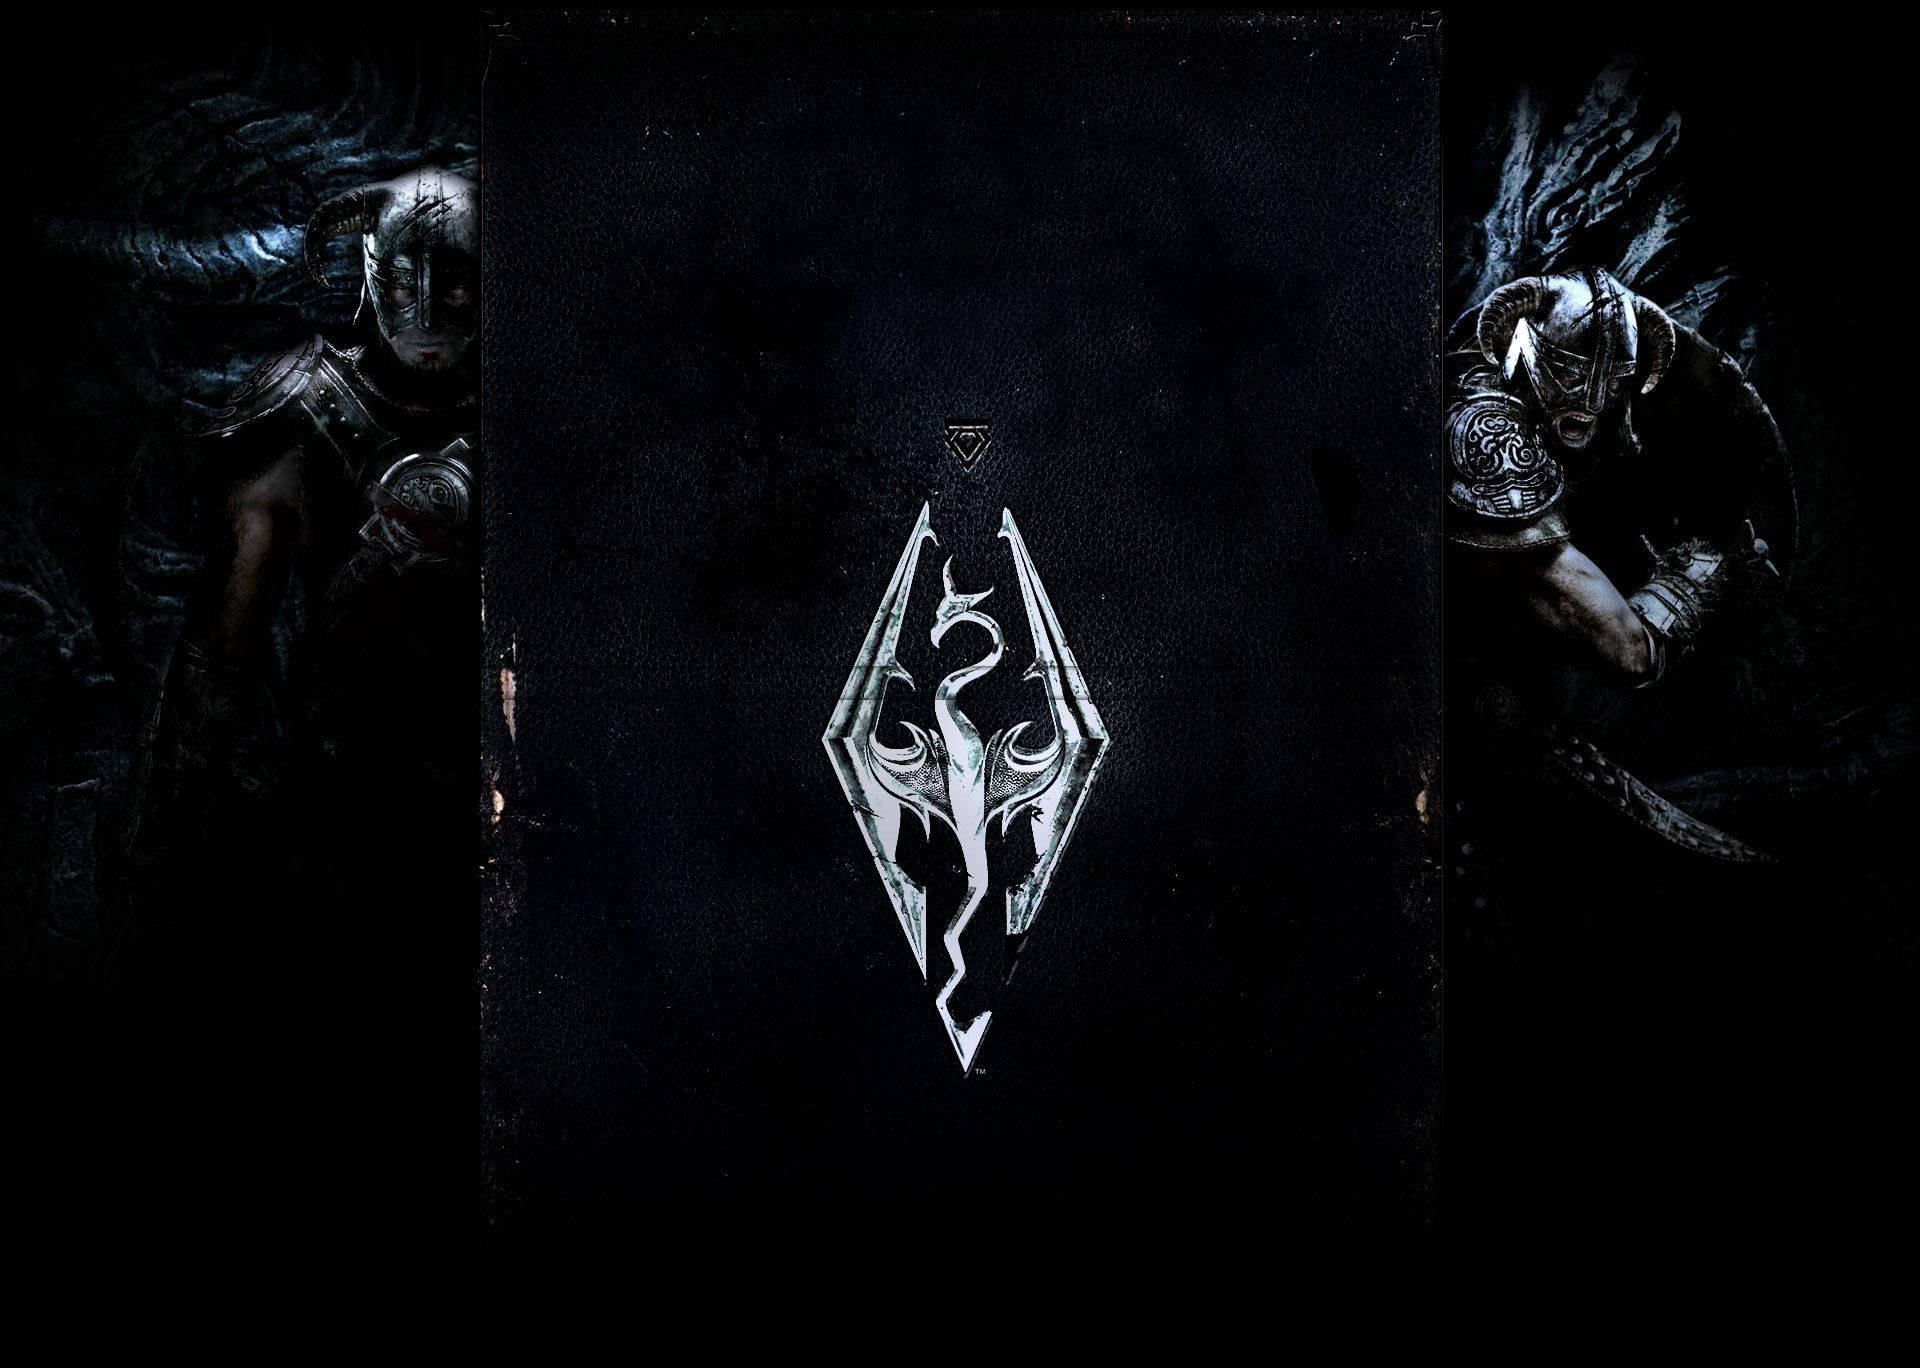 Cool Logos From Elder Scrolls Skyrim